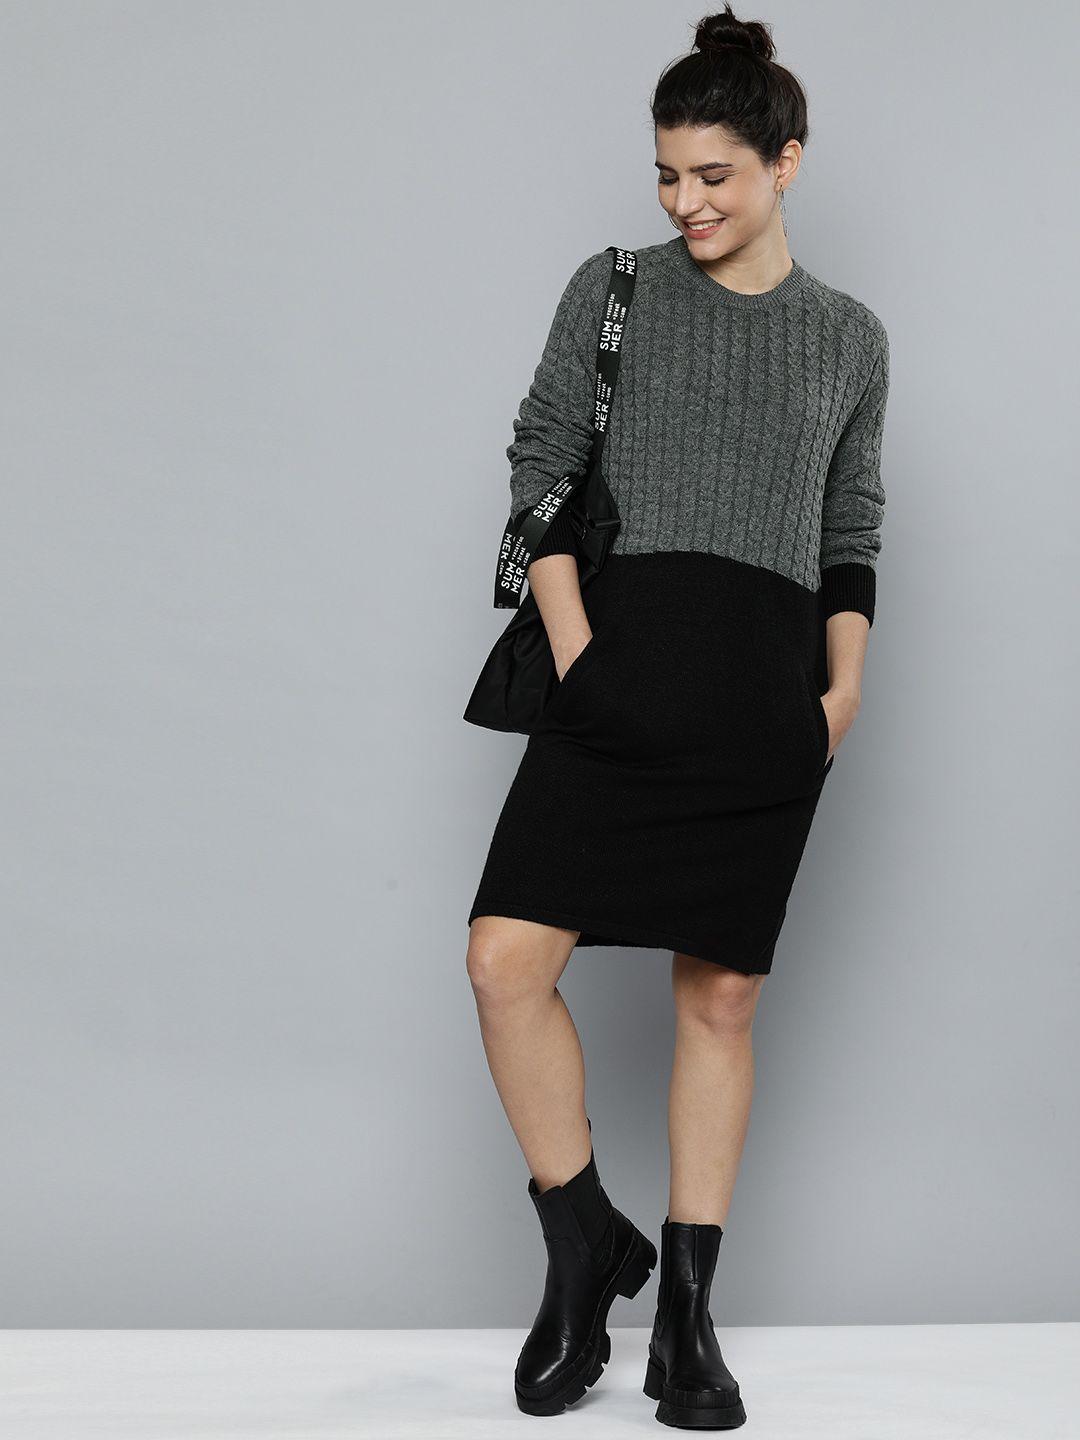 here&now women grey & black colourblocked sweater dress